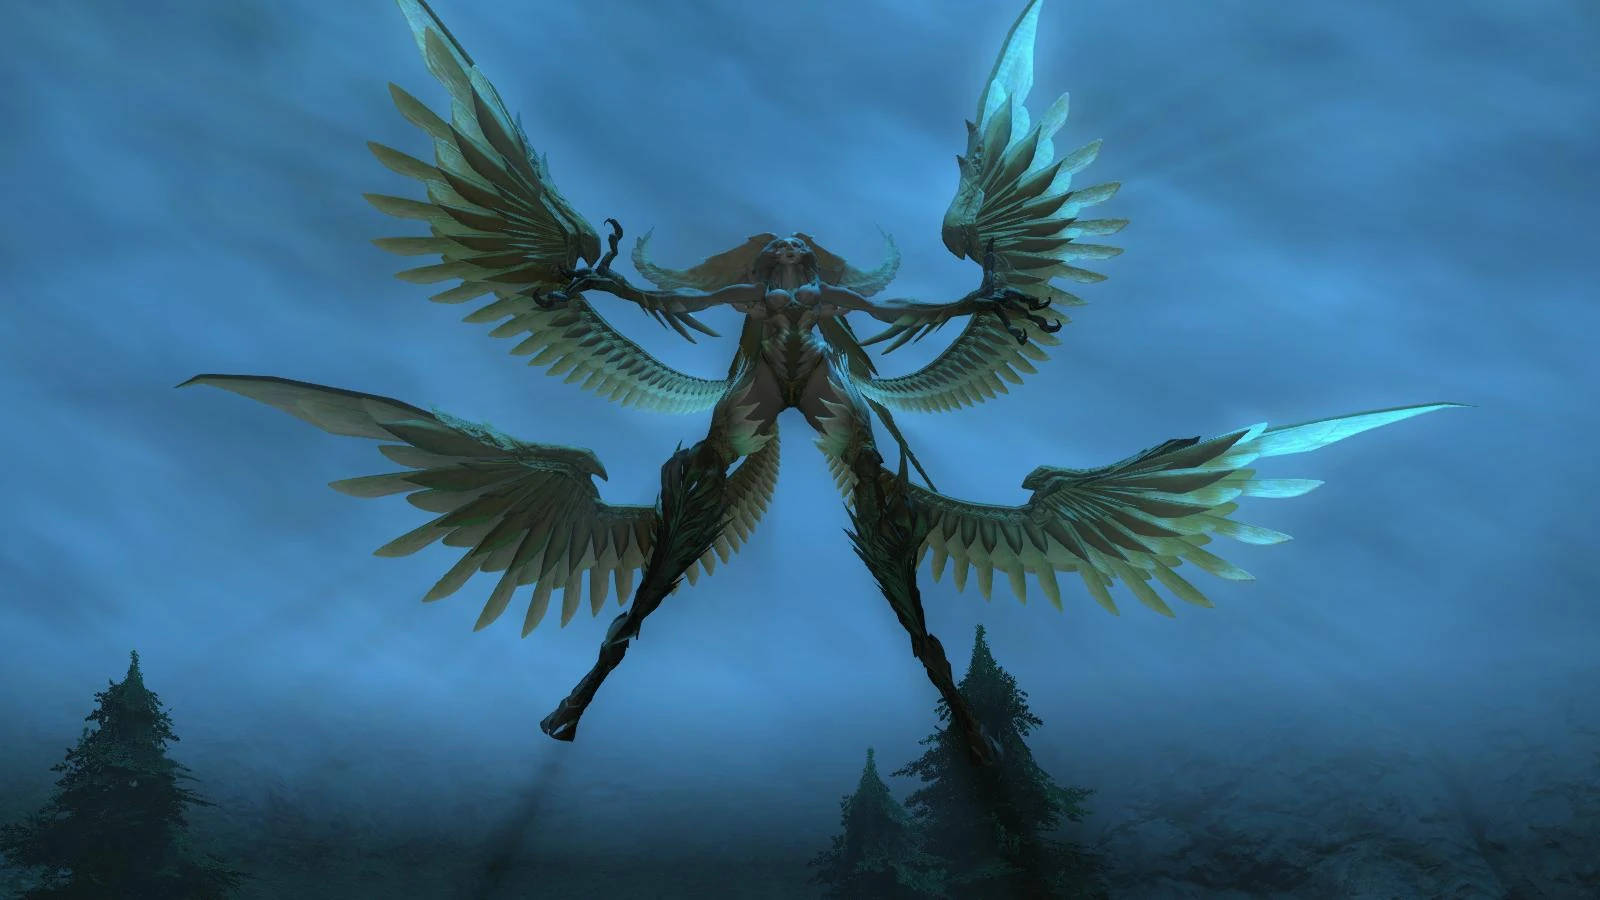 Final Fantasy Xiv Garuda Summon Picture